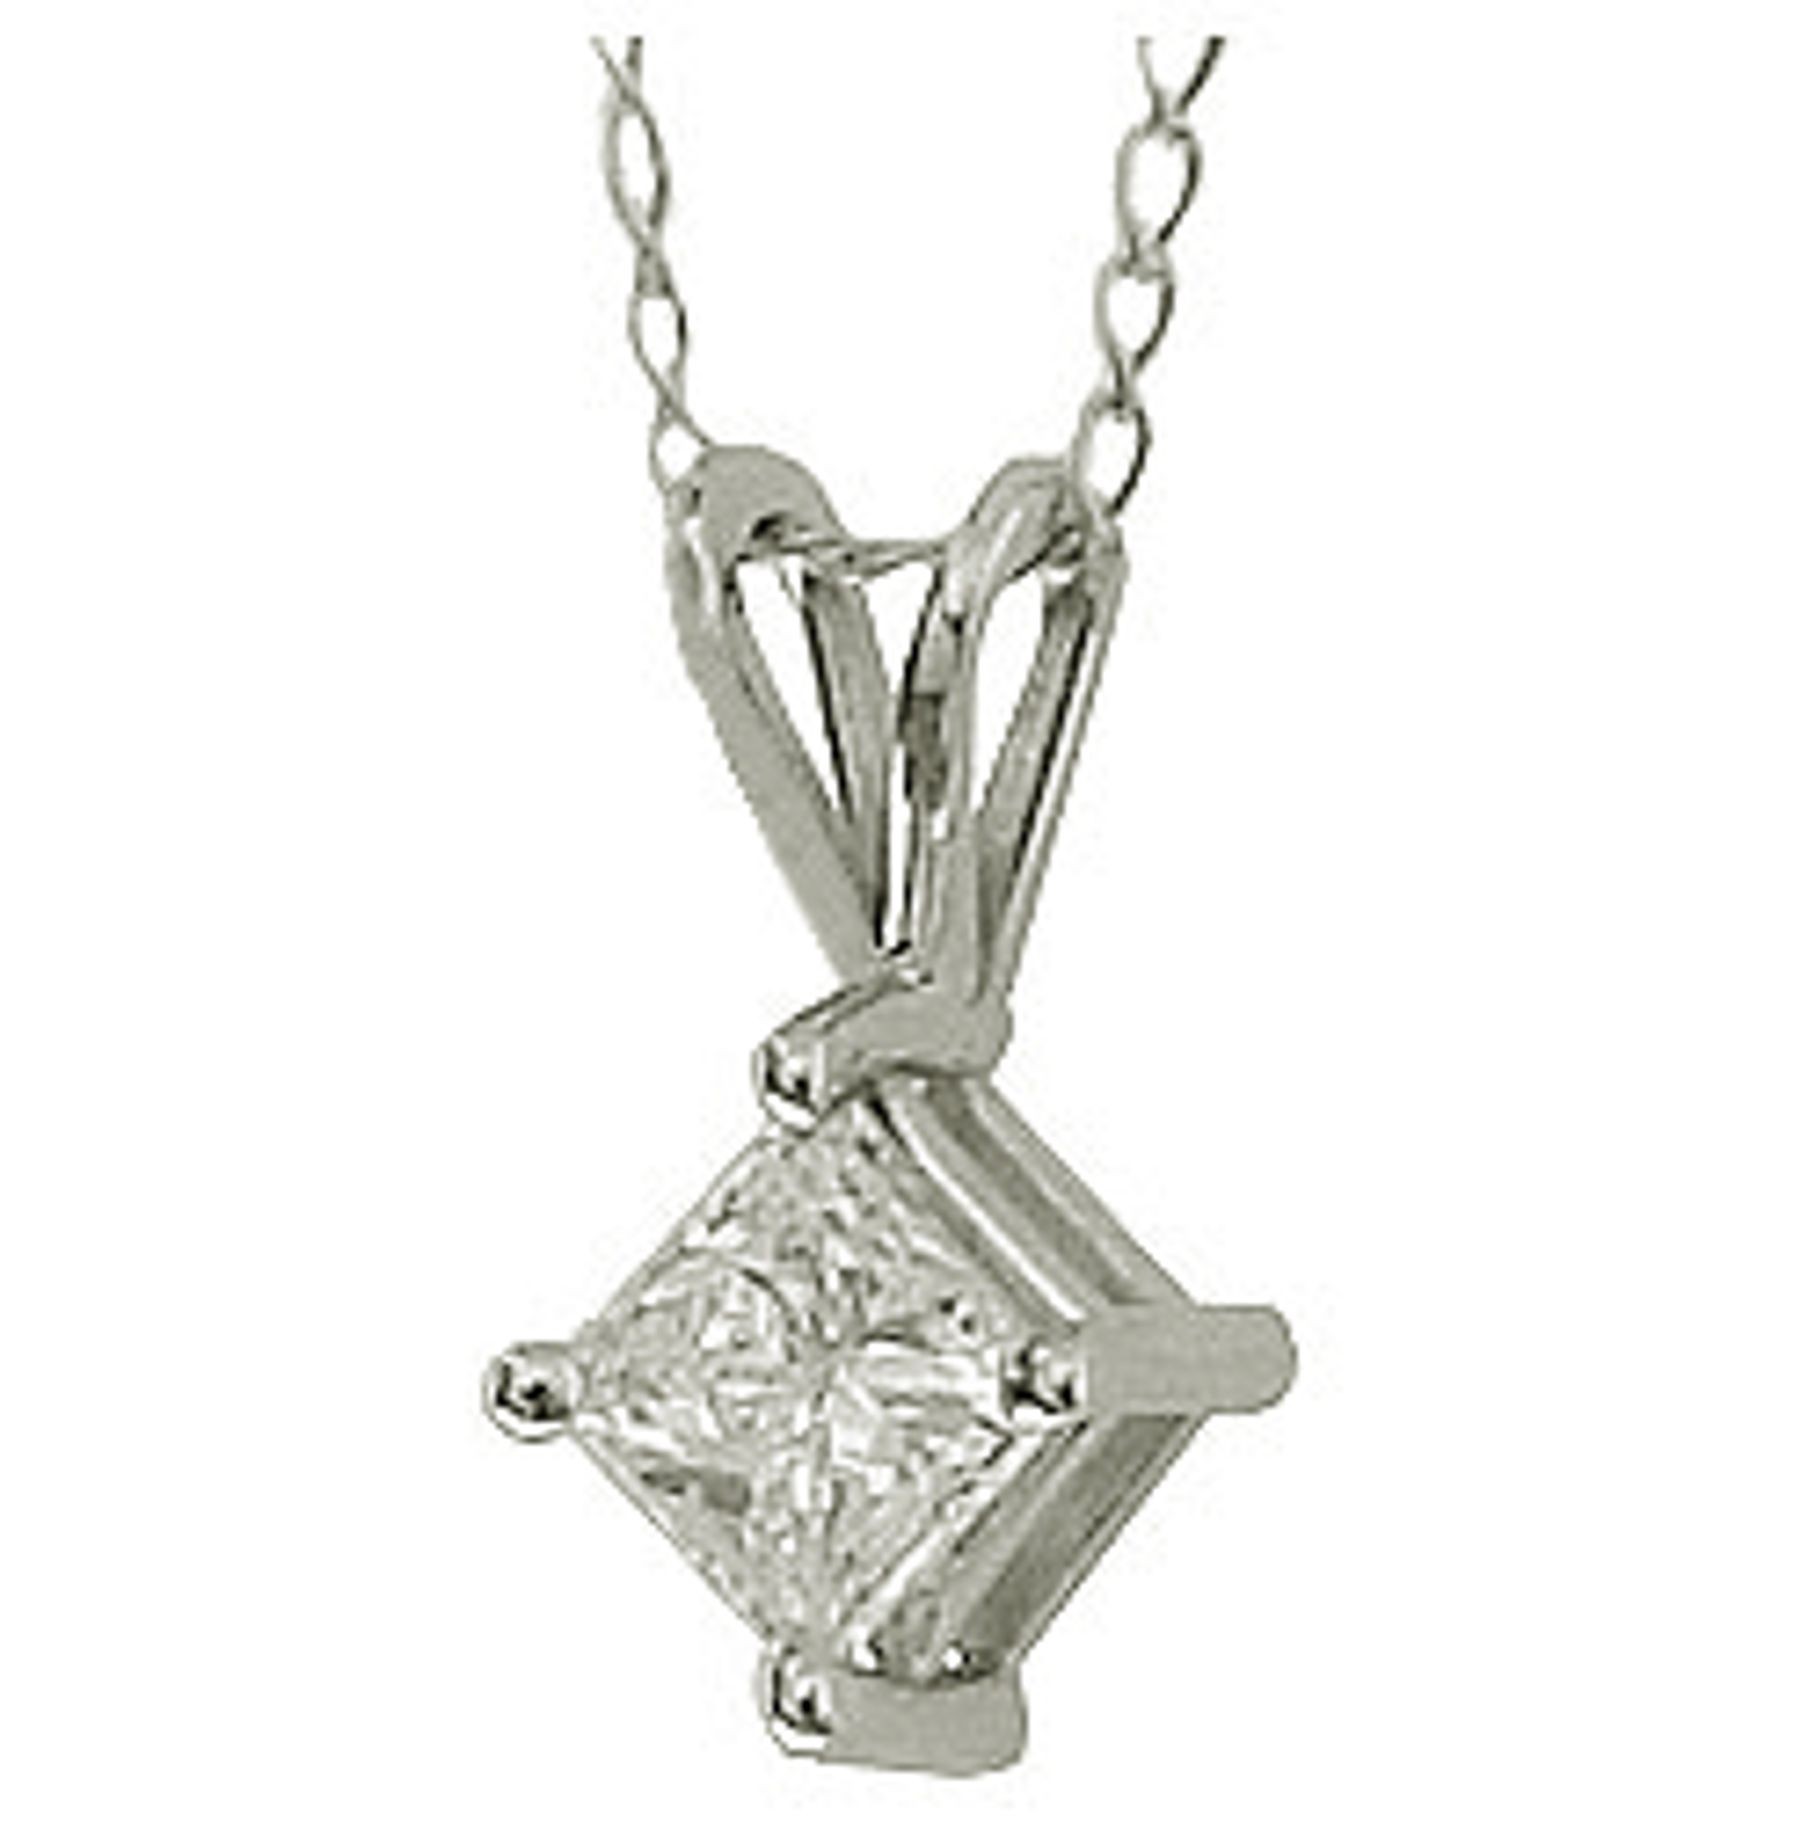 Diamond pendant. 14k prong set princess cut diamond solitaire pendant with chain